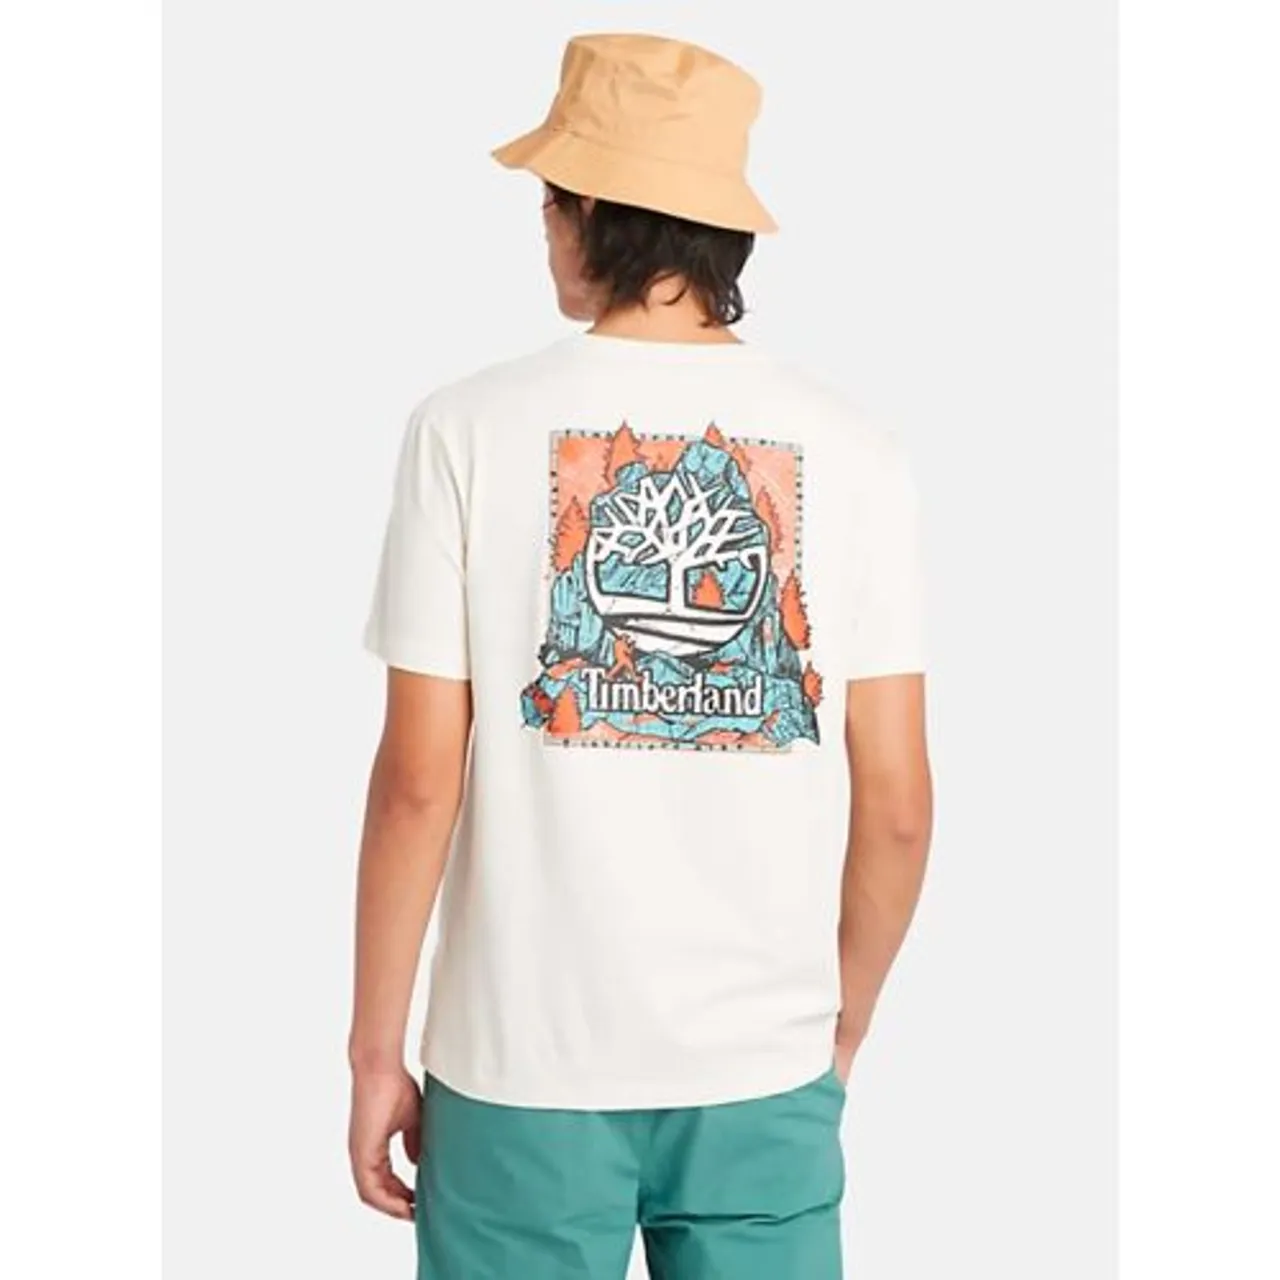 Timberland Mens Vintage White Back Graphic Short Sleeve T-Shirt